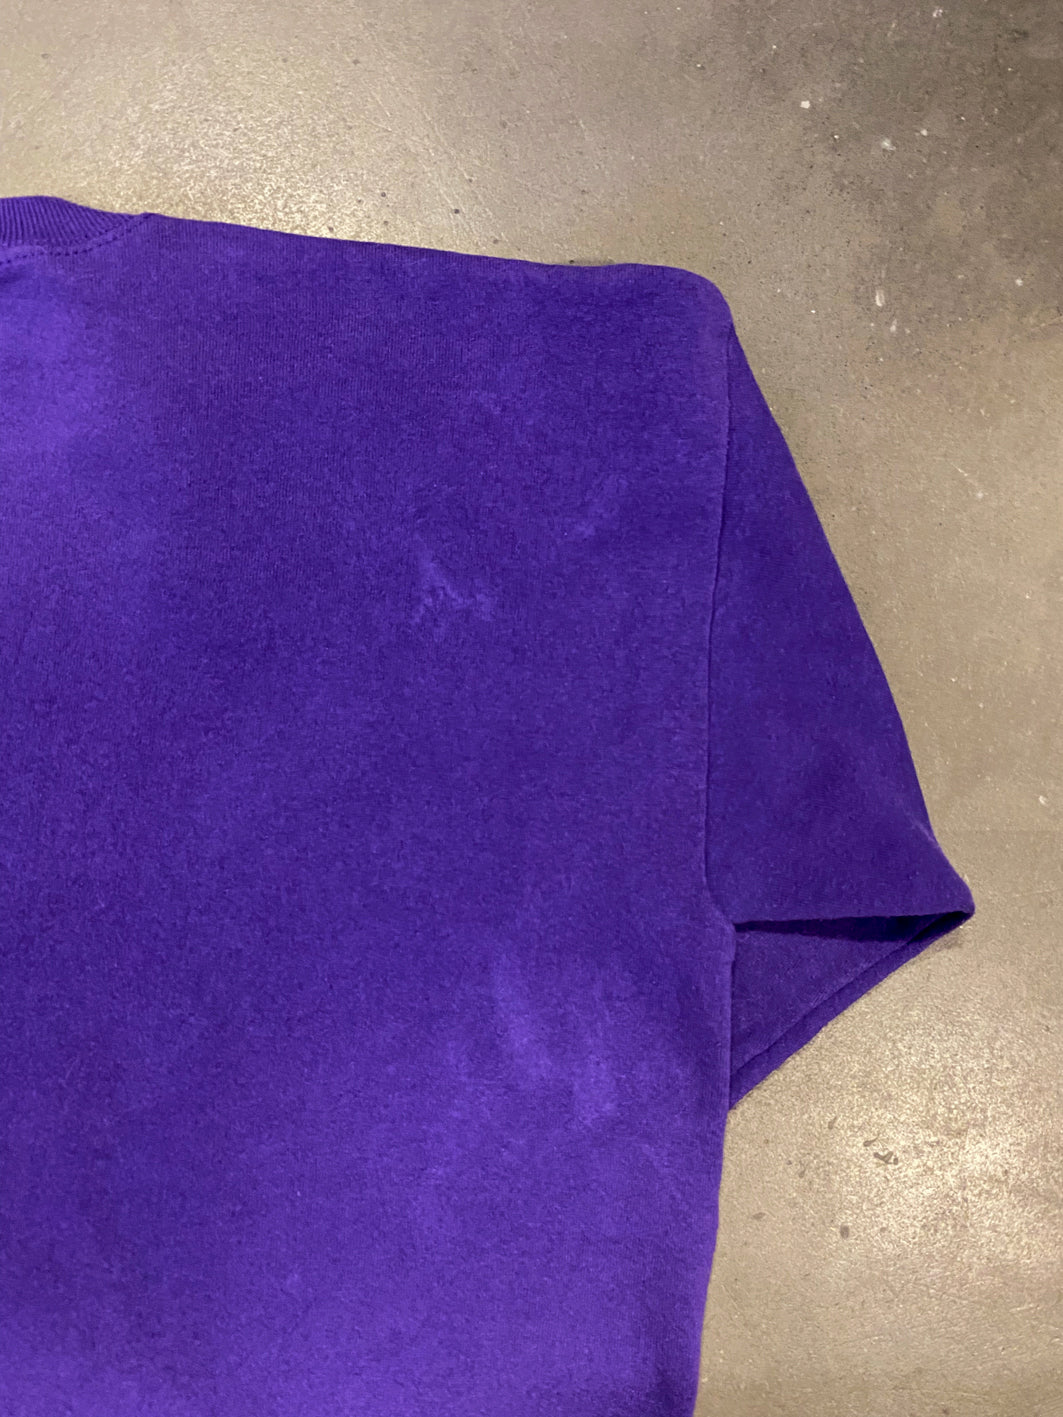 Reworked Artex Sportswear Sweatshirt in Purple Rave Print